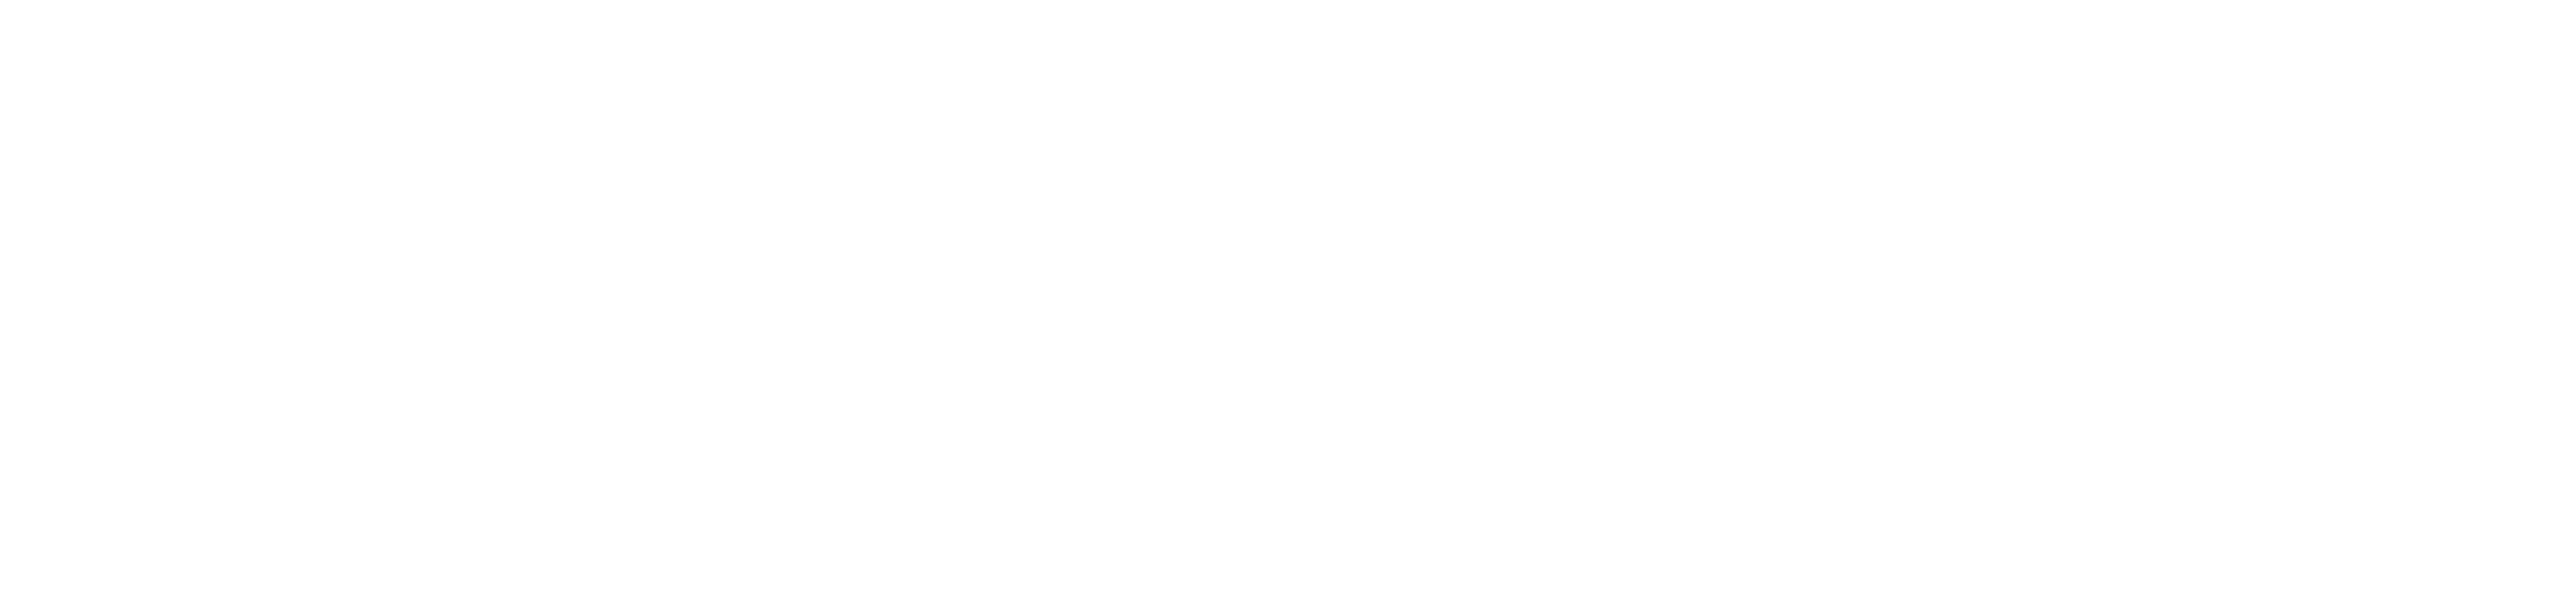 Local Gov Health + Wellness Annual Benefit Administrators Conference-Gadsden